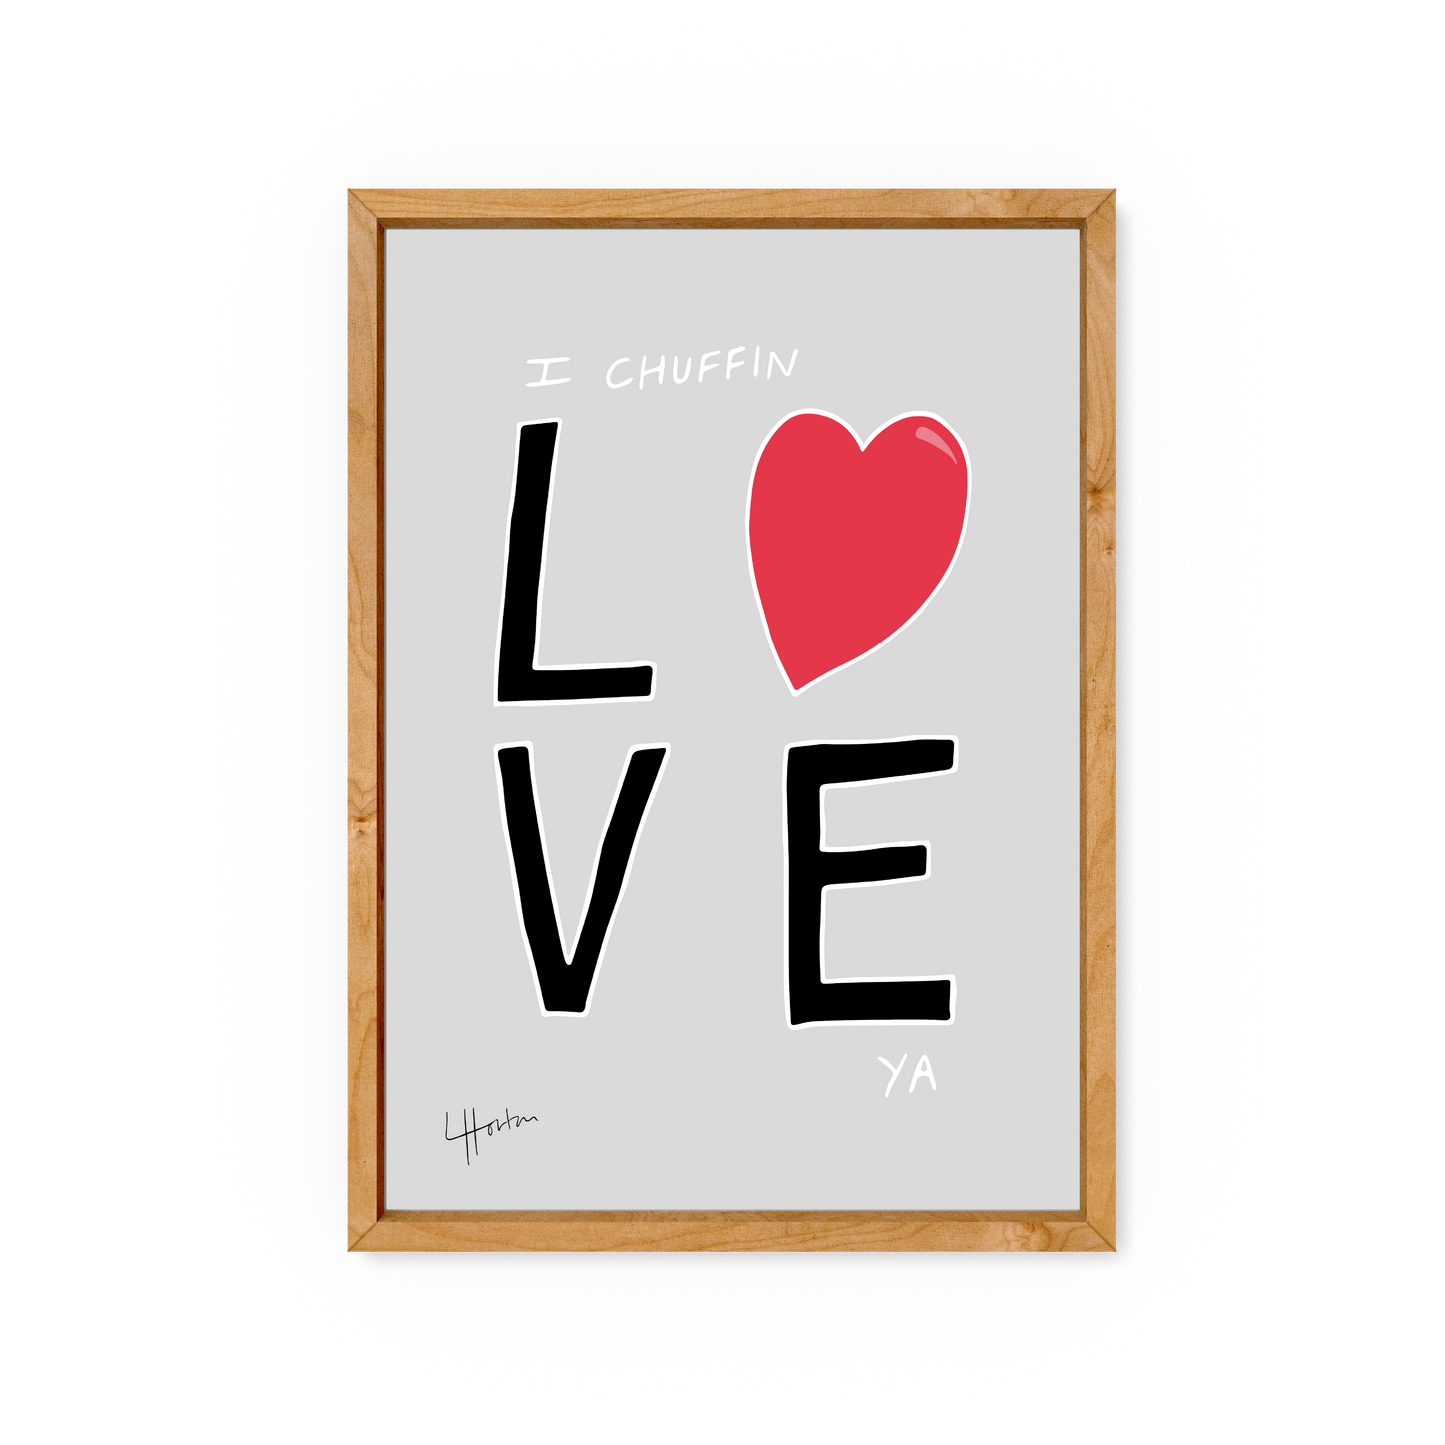 I Chuffin Love Ya - Yorkshire Slang Art Print - Luke Horton